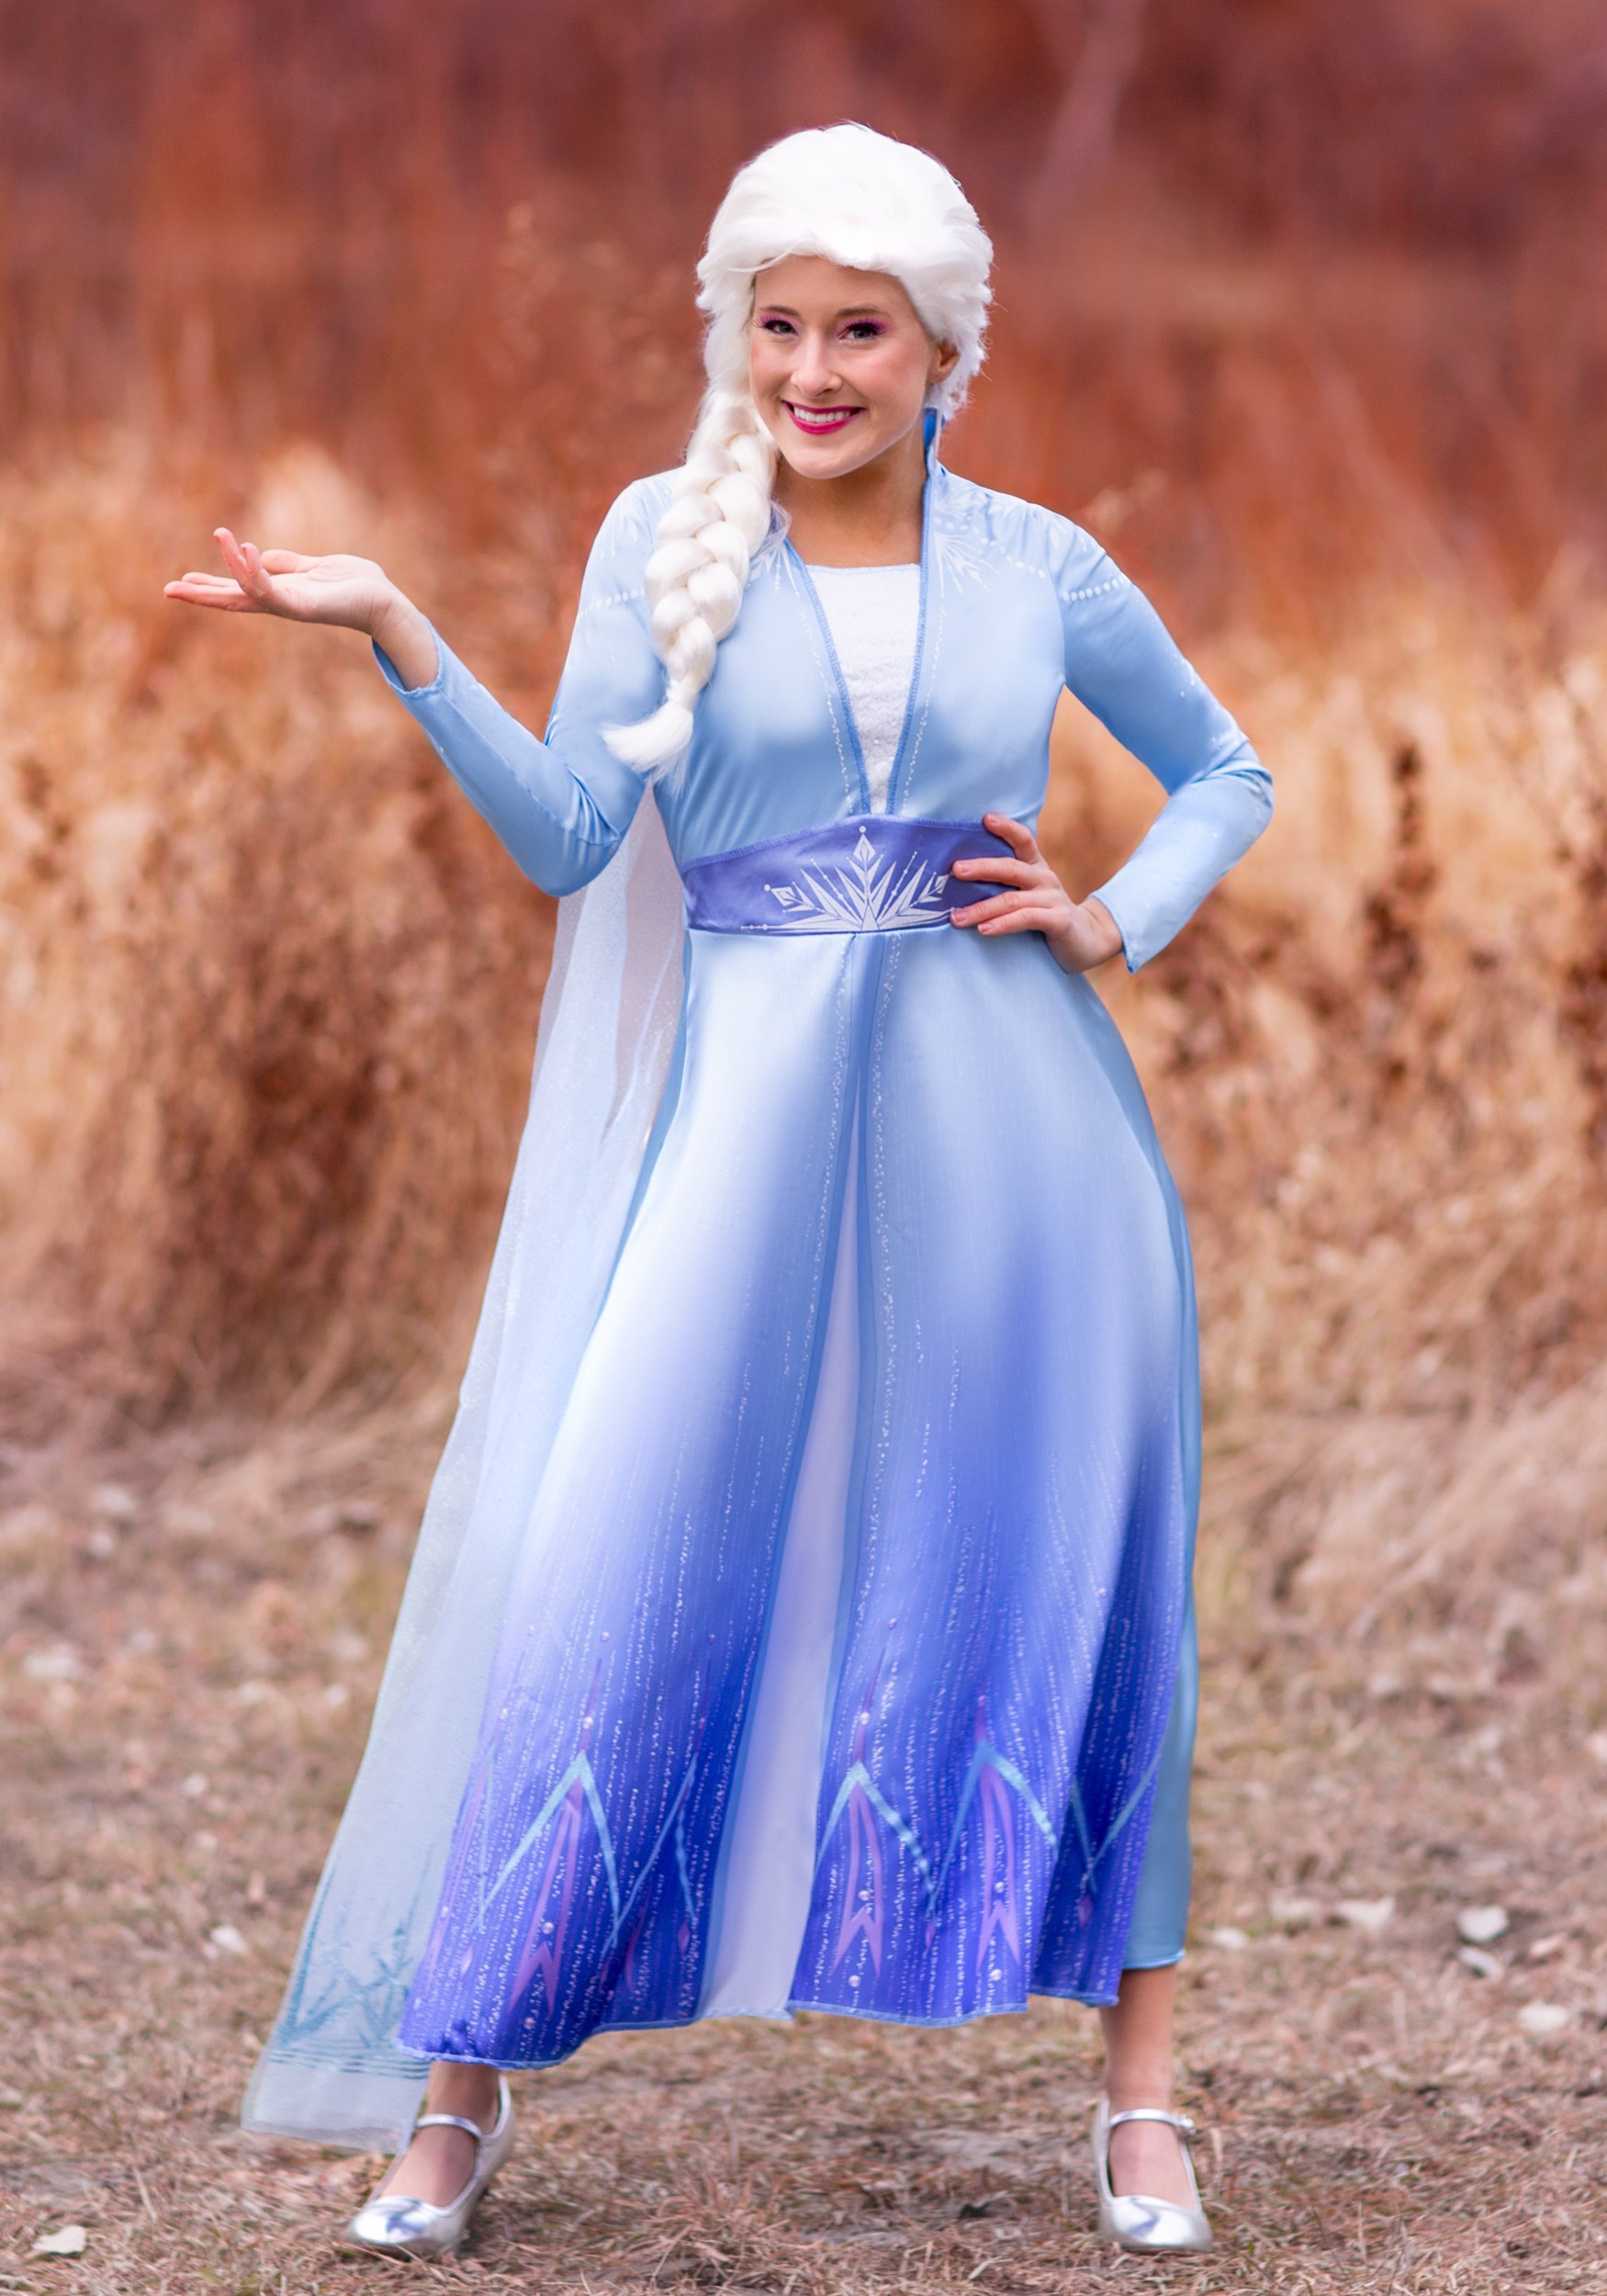 Princess Elsa Disney Frozen Platinum Blond Braided Costume Wig Dress Up SZ 4+ 